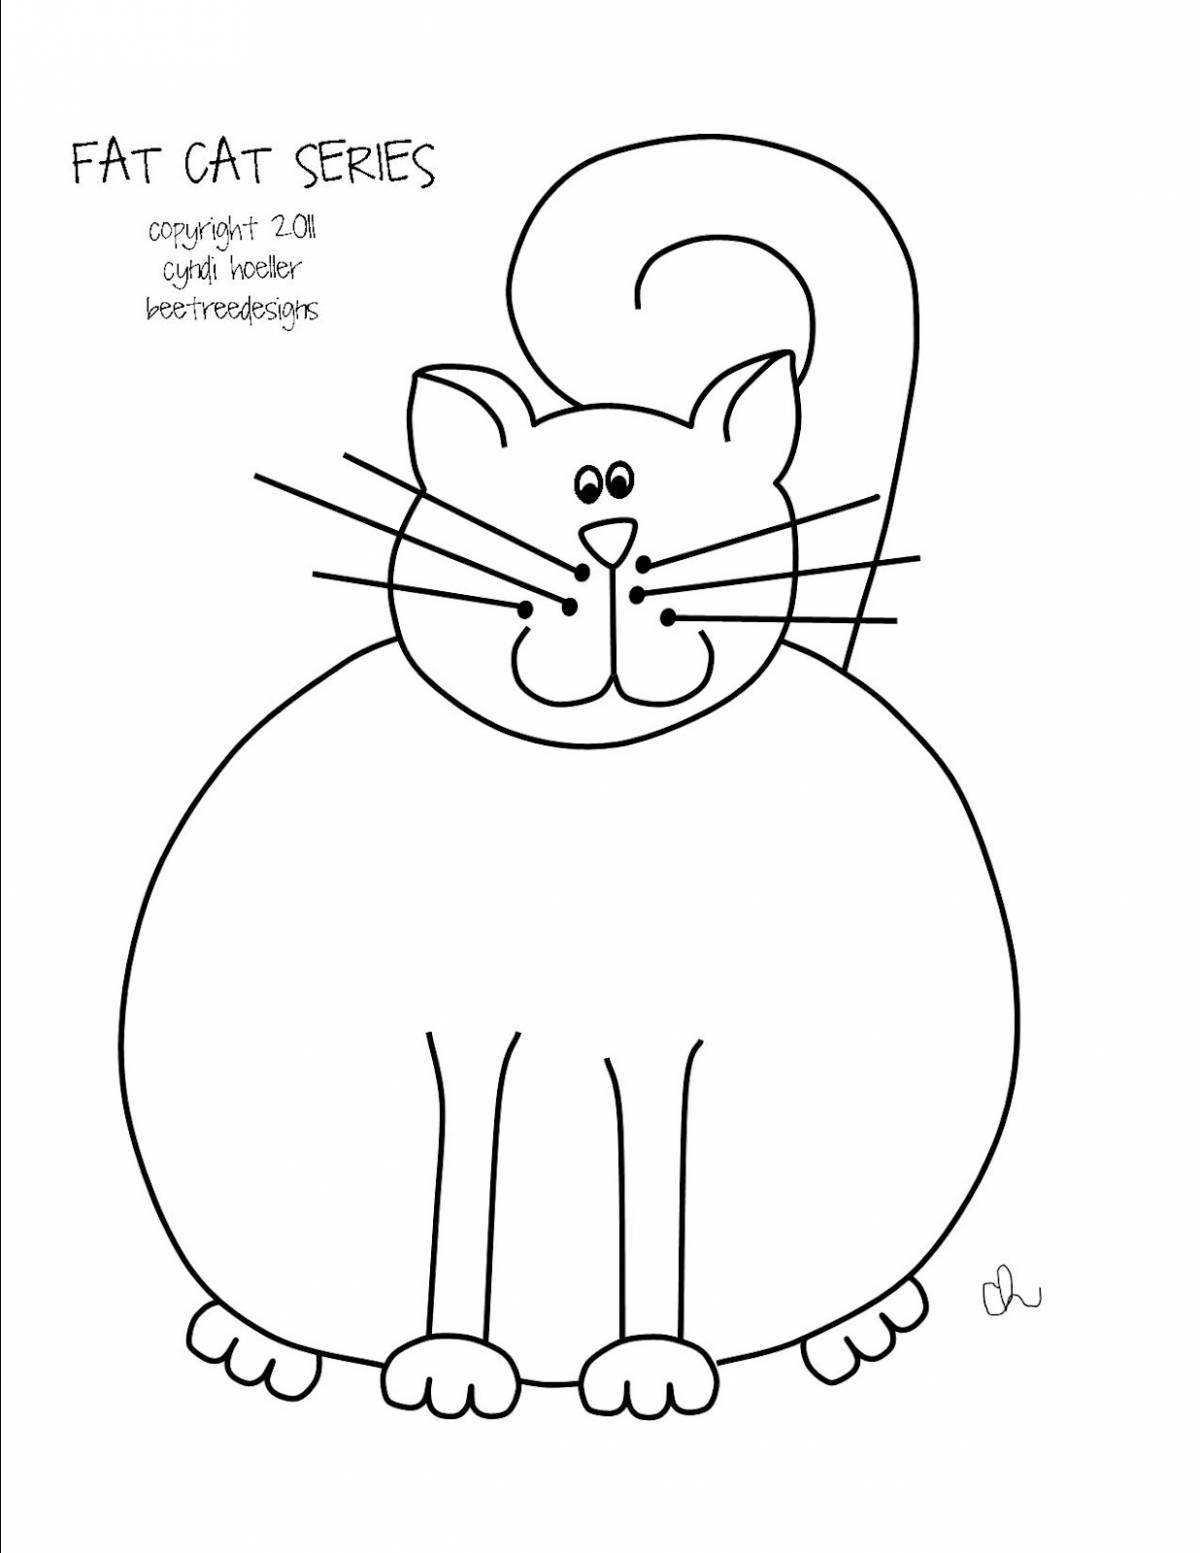 Fat cat #1